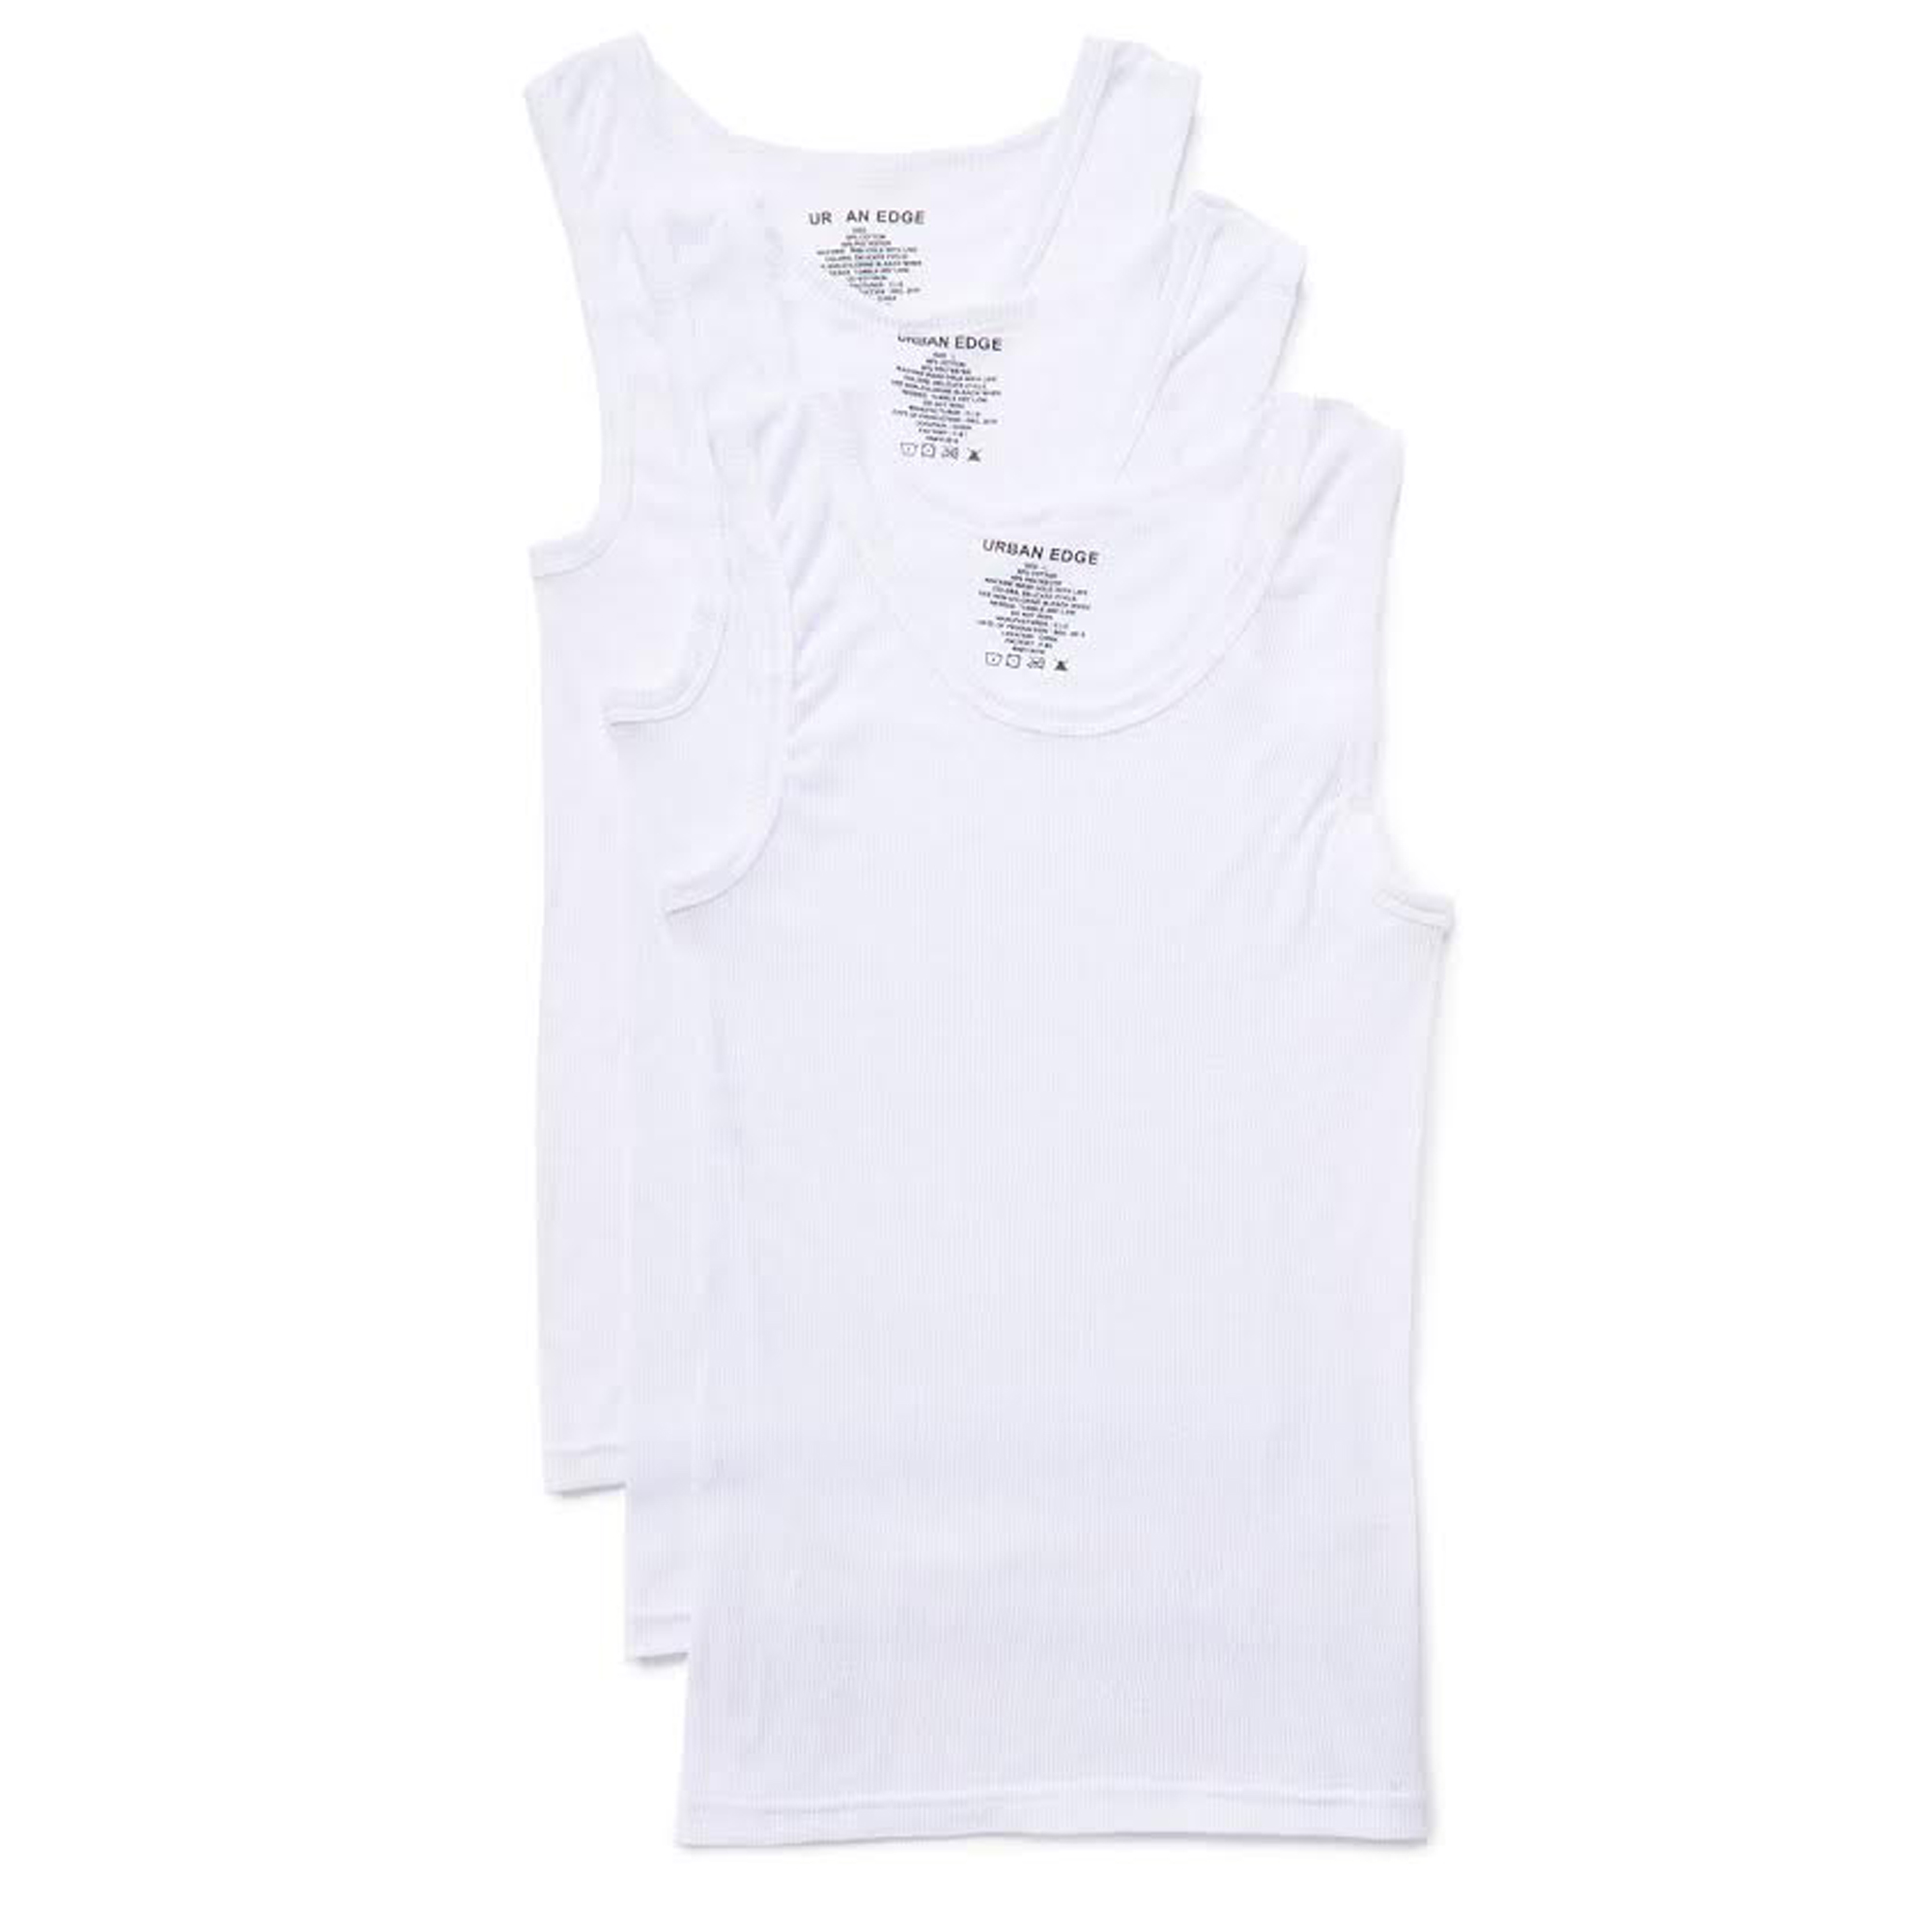 Men's URBAN Edge Ribbed White A-Shirts - Sizes Medium-2XL - 3 Pack